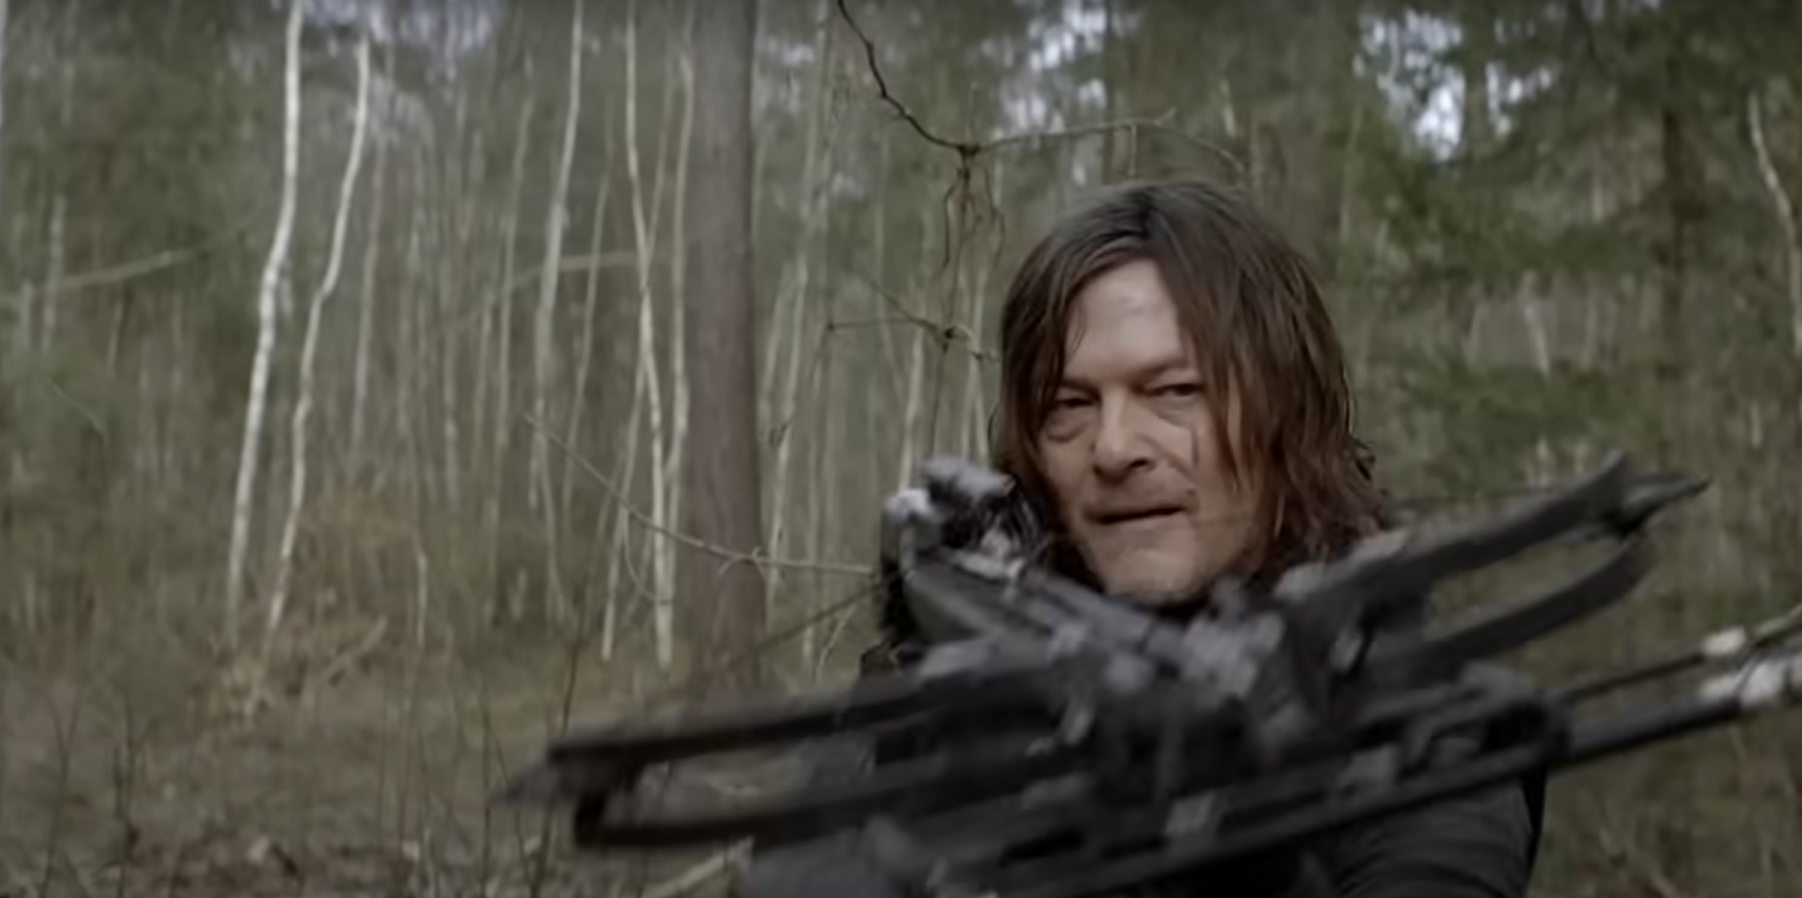 Norman Reedus - The Walking Dead Daryl Dixon ©AMC